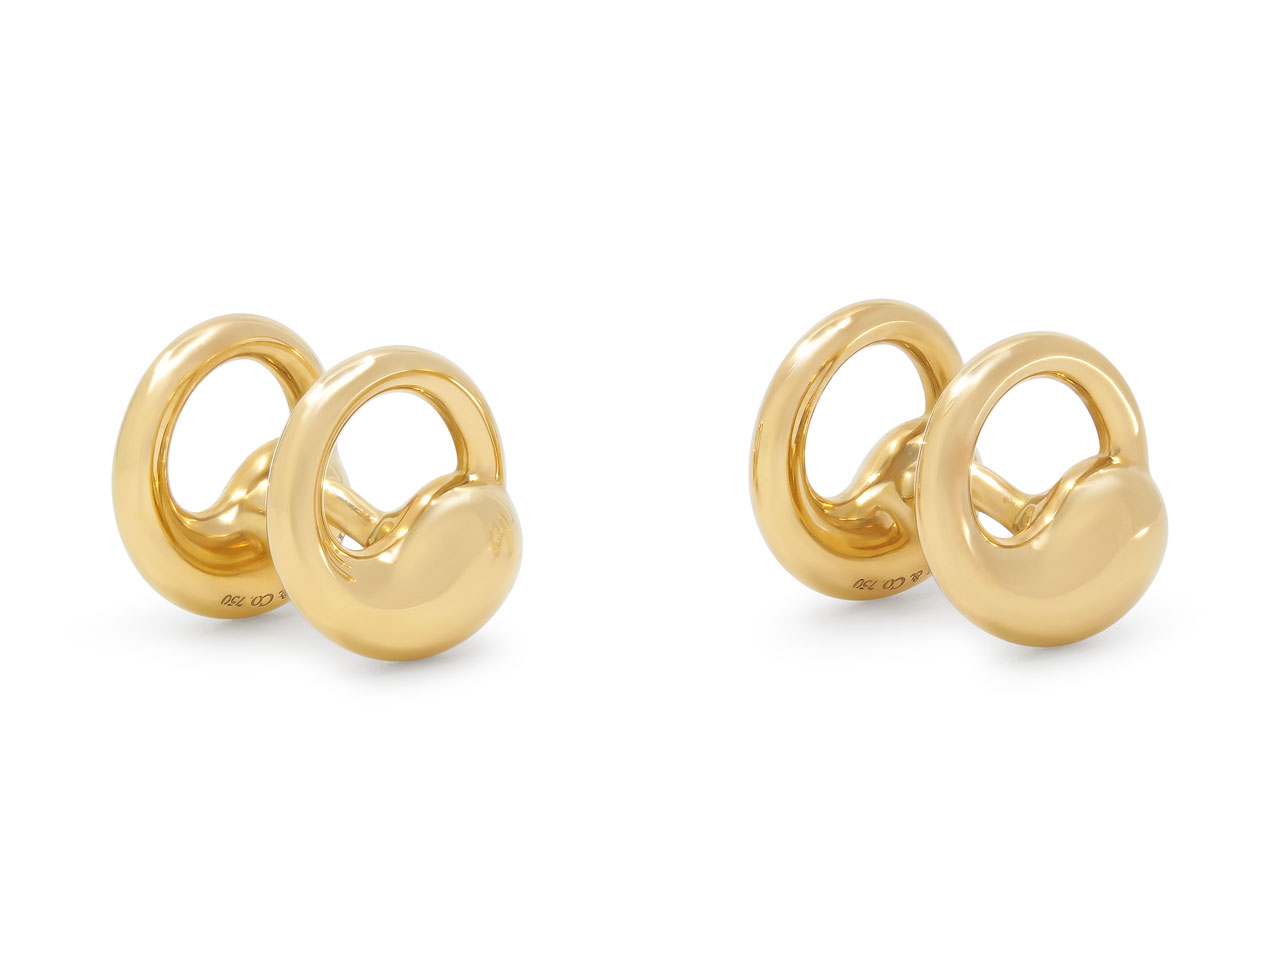 Tiffany & Co. Elsa Peretti 'Eternal Circle' Cufflinks in 18K Gold